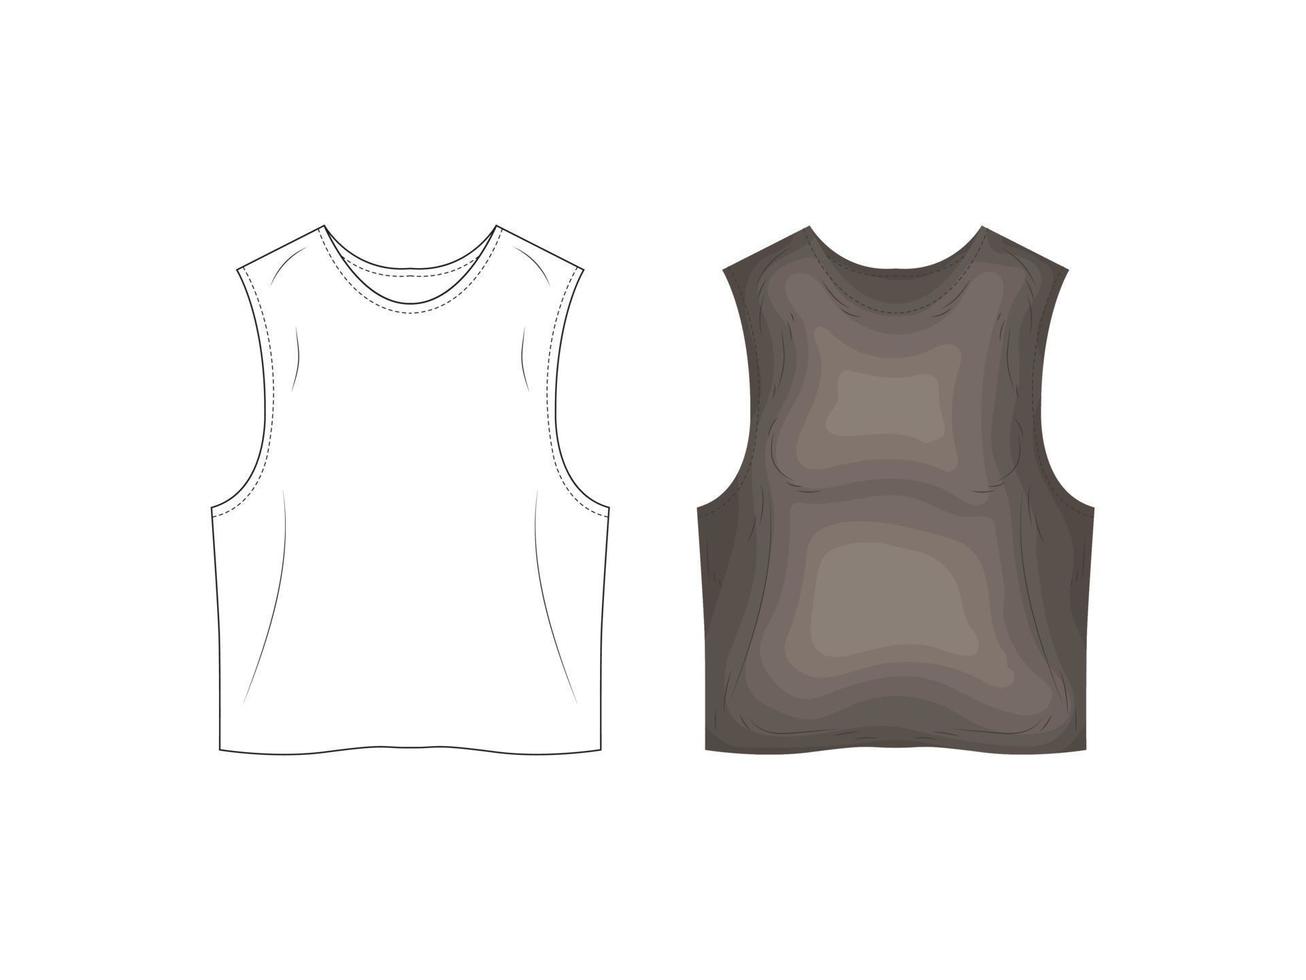 mode produktkatalog uniformer mockup skiss vektor illustration kläder siluett